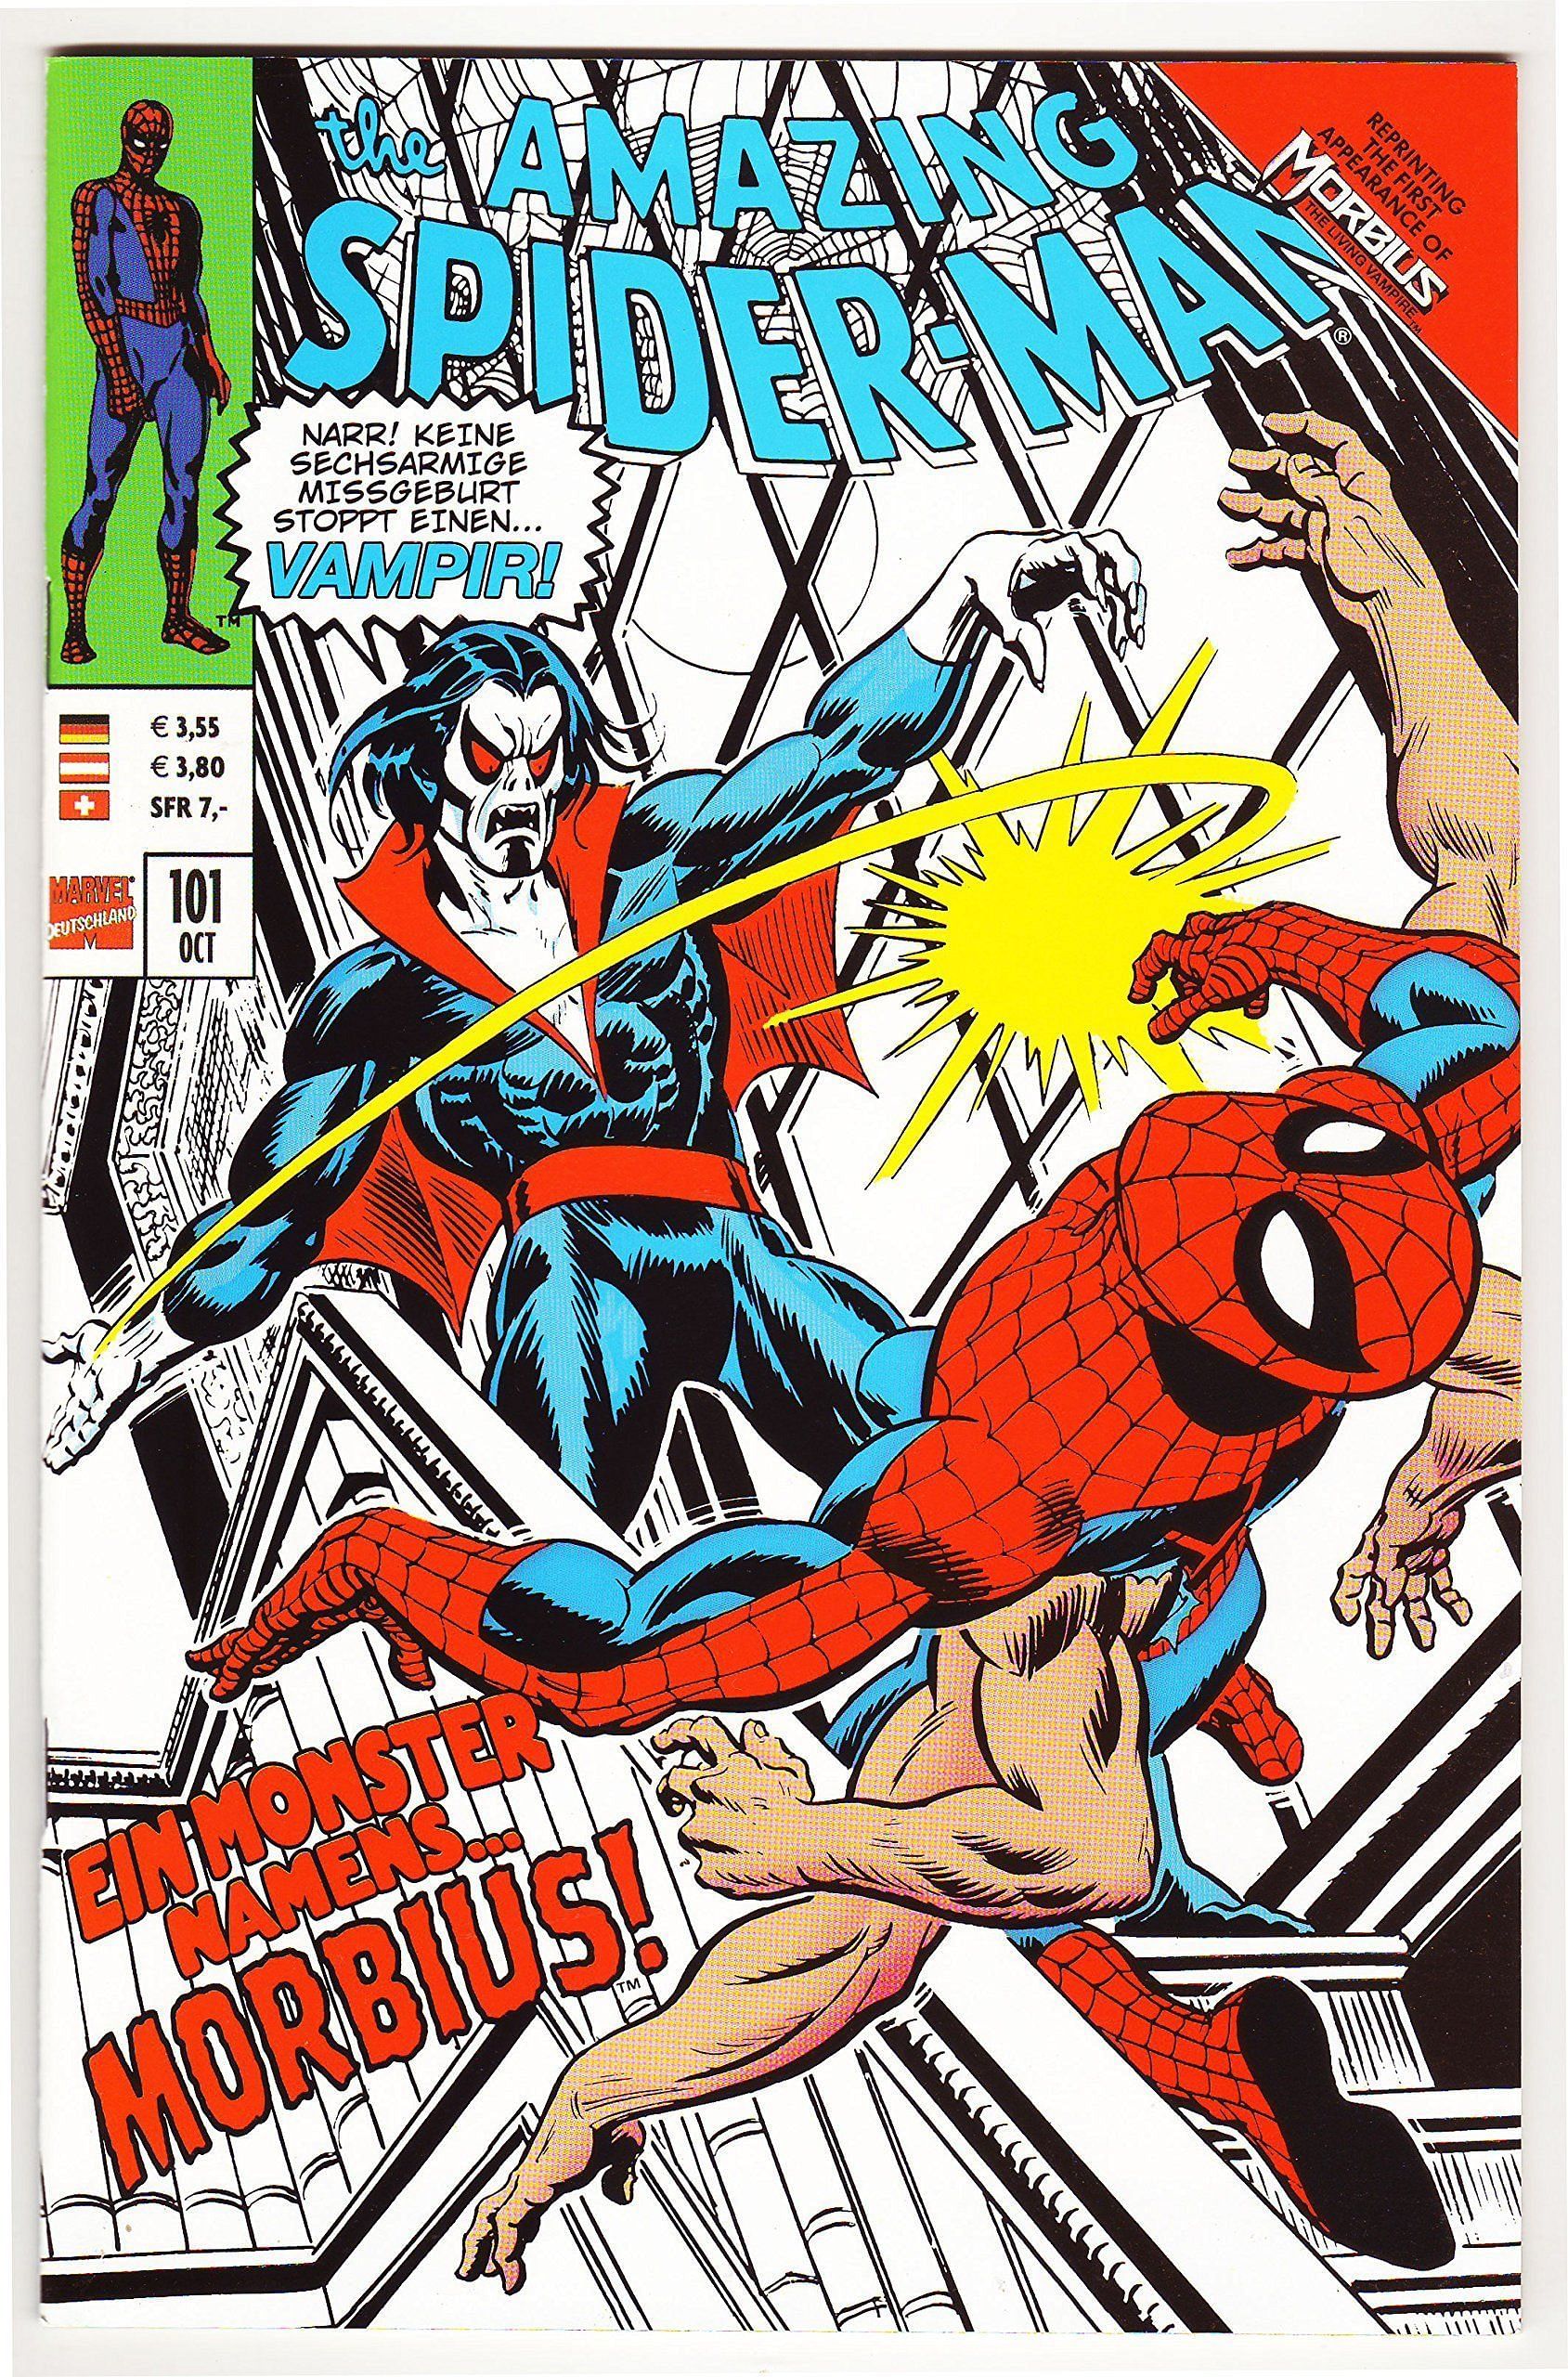 Spidey vs Morbius in comics (Image via Marvel Comics)